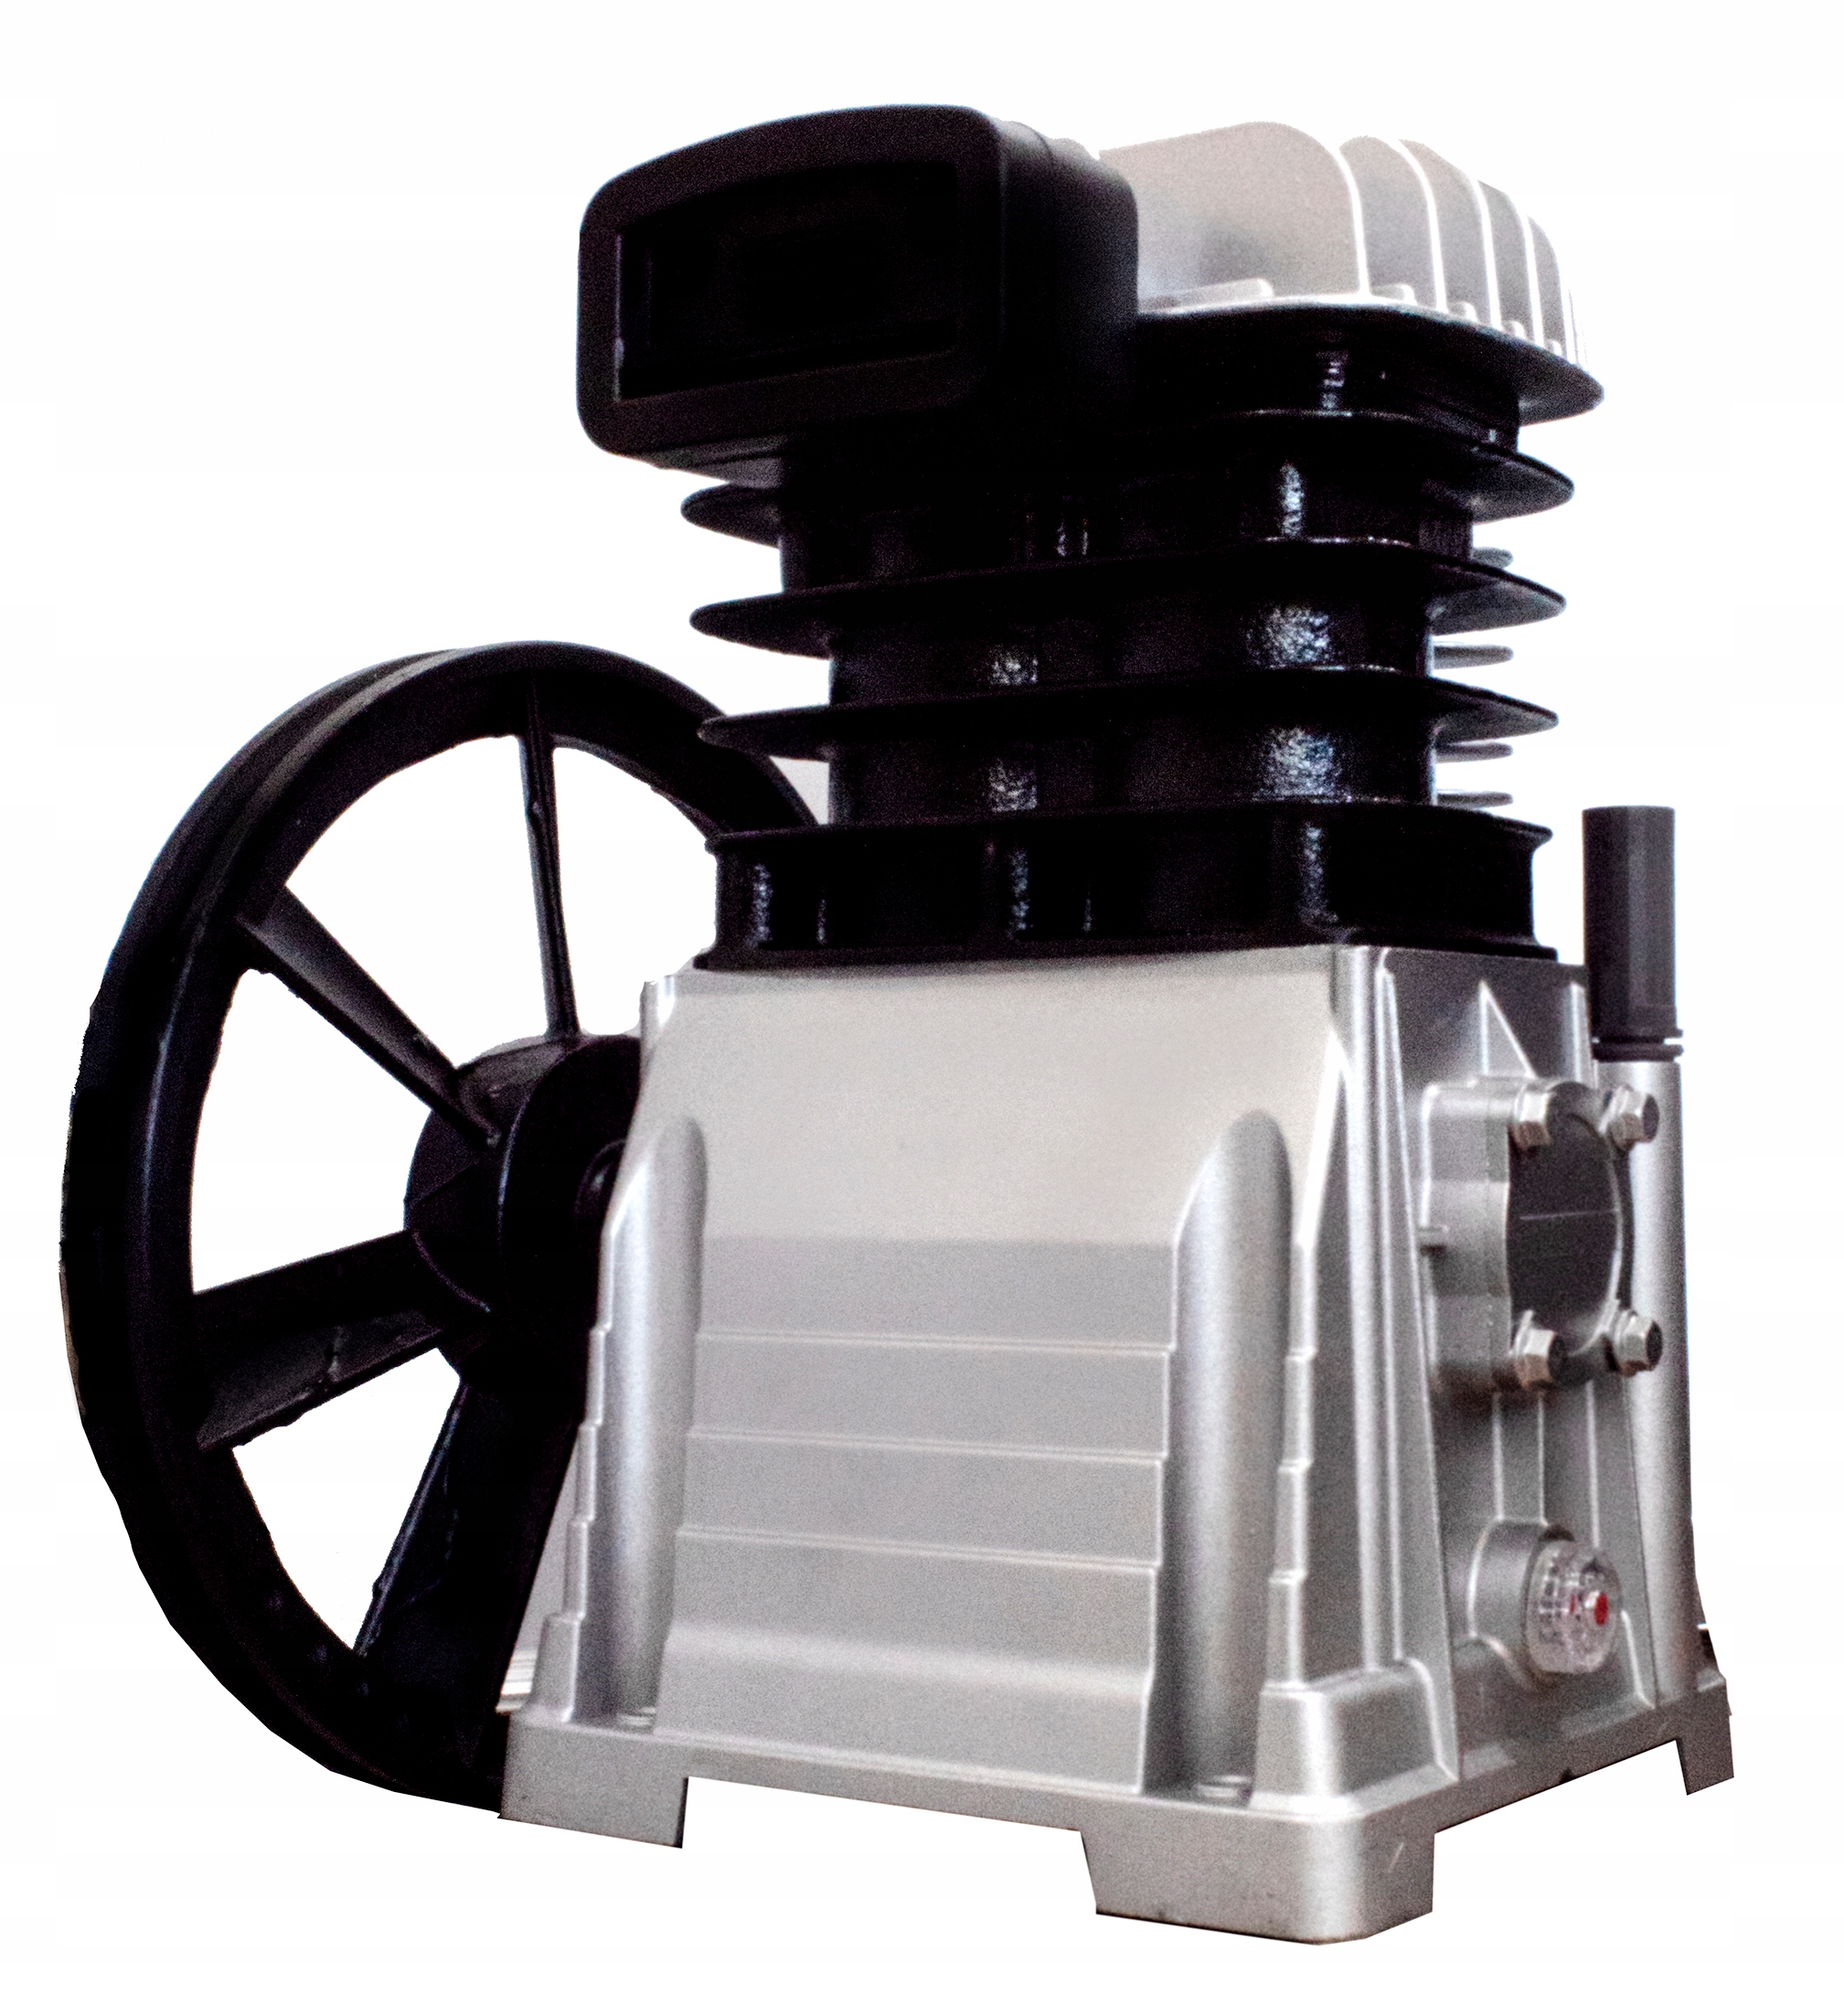 Kompresor sprężarka pompa głowica K-520 Kupczyk EAN (GTIN) 5907737376819